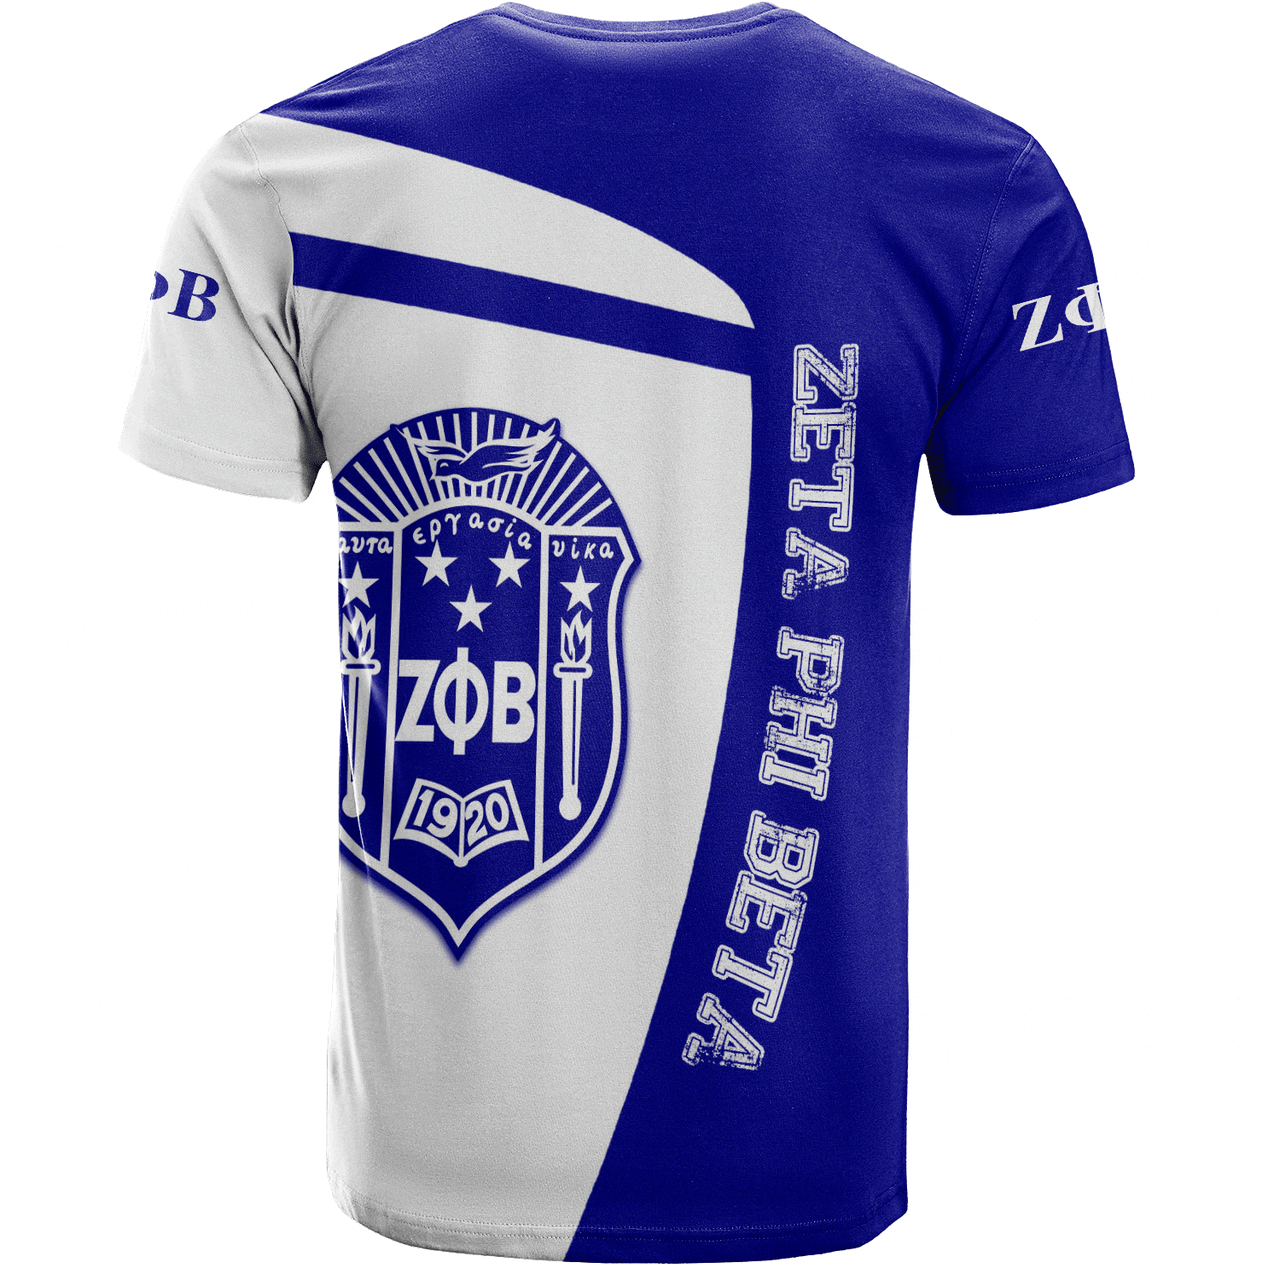 Zeta Phi Beta T-Shirt Spring Style